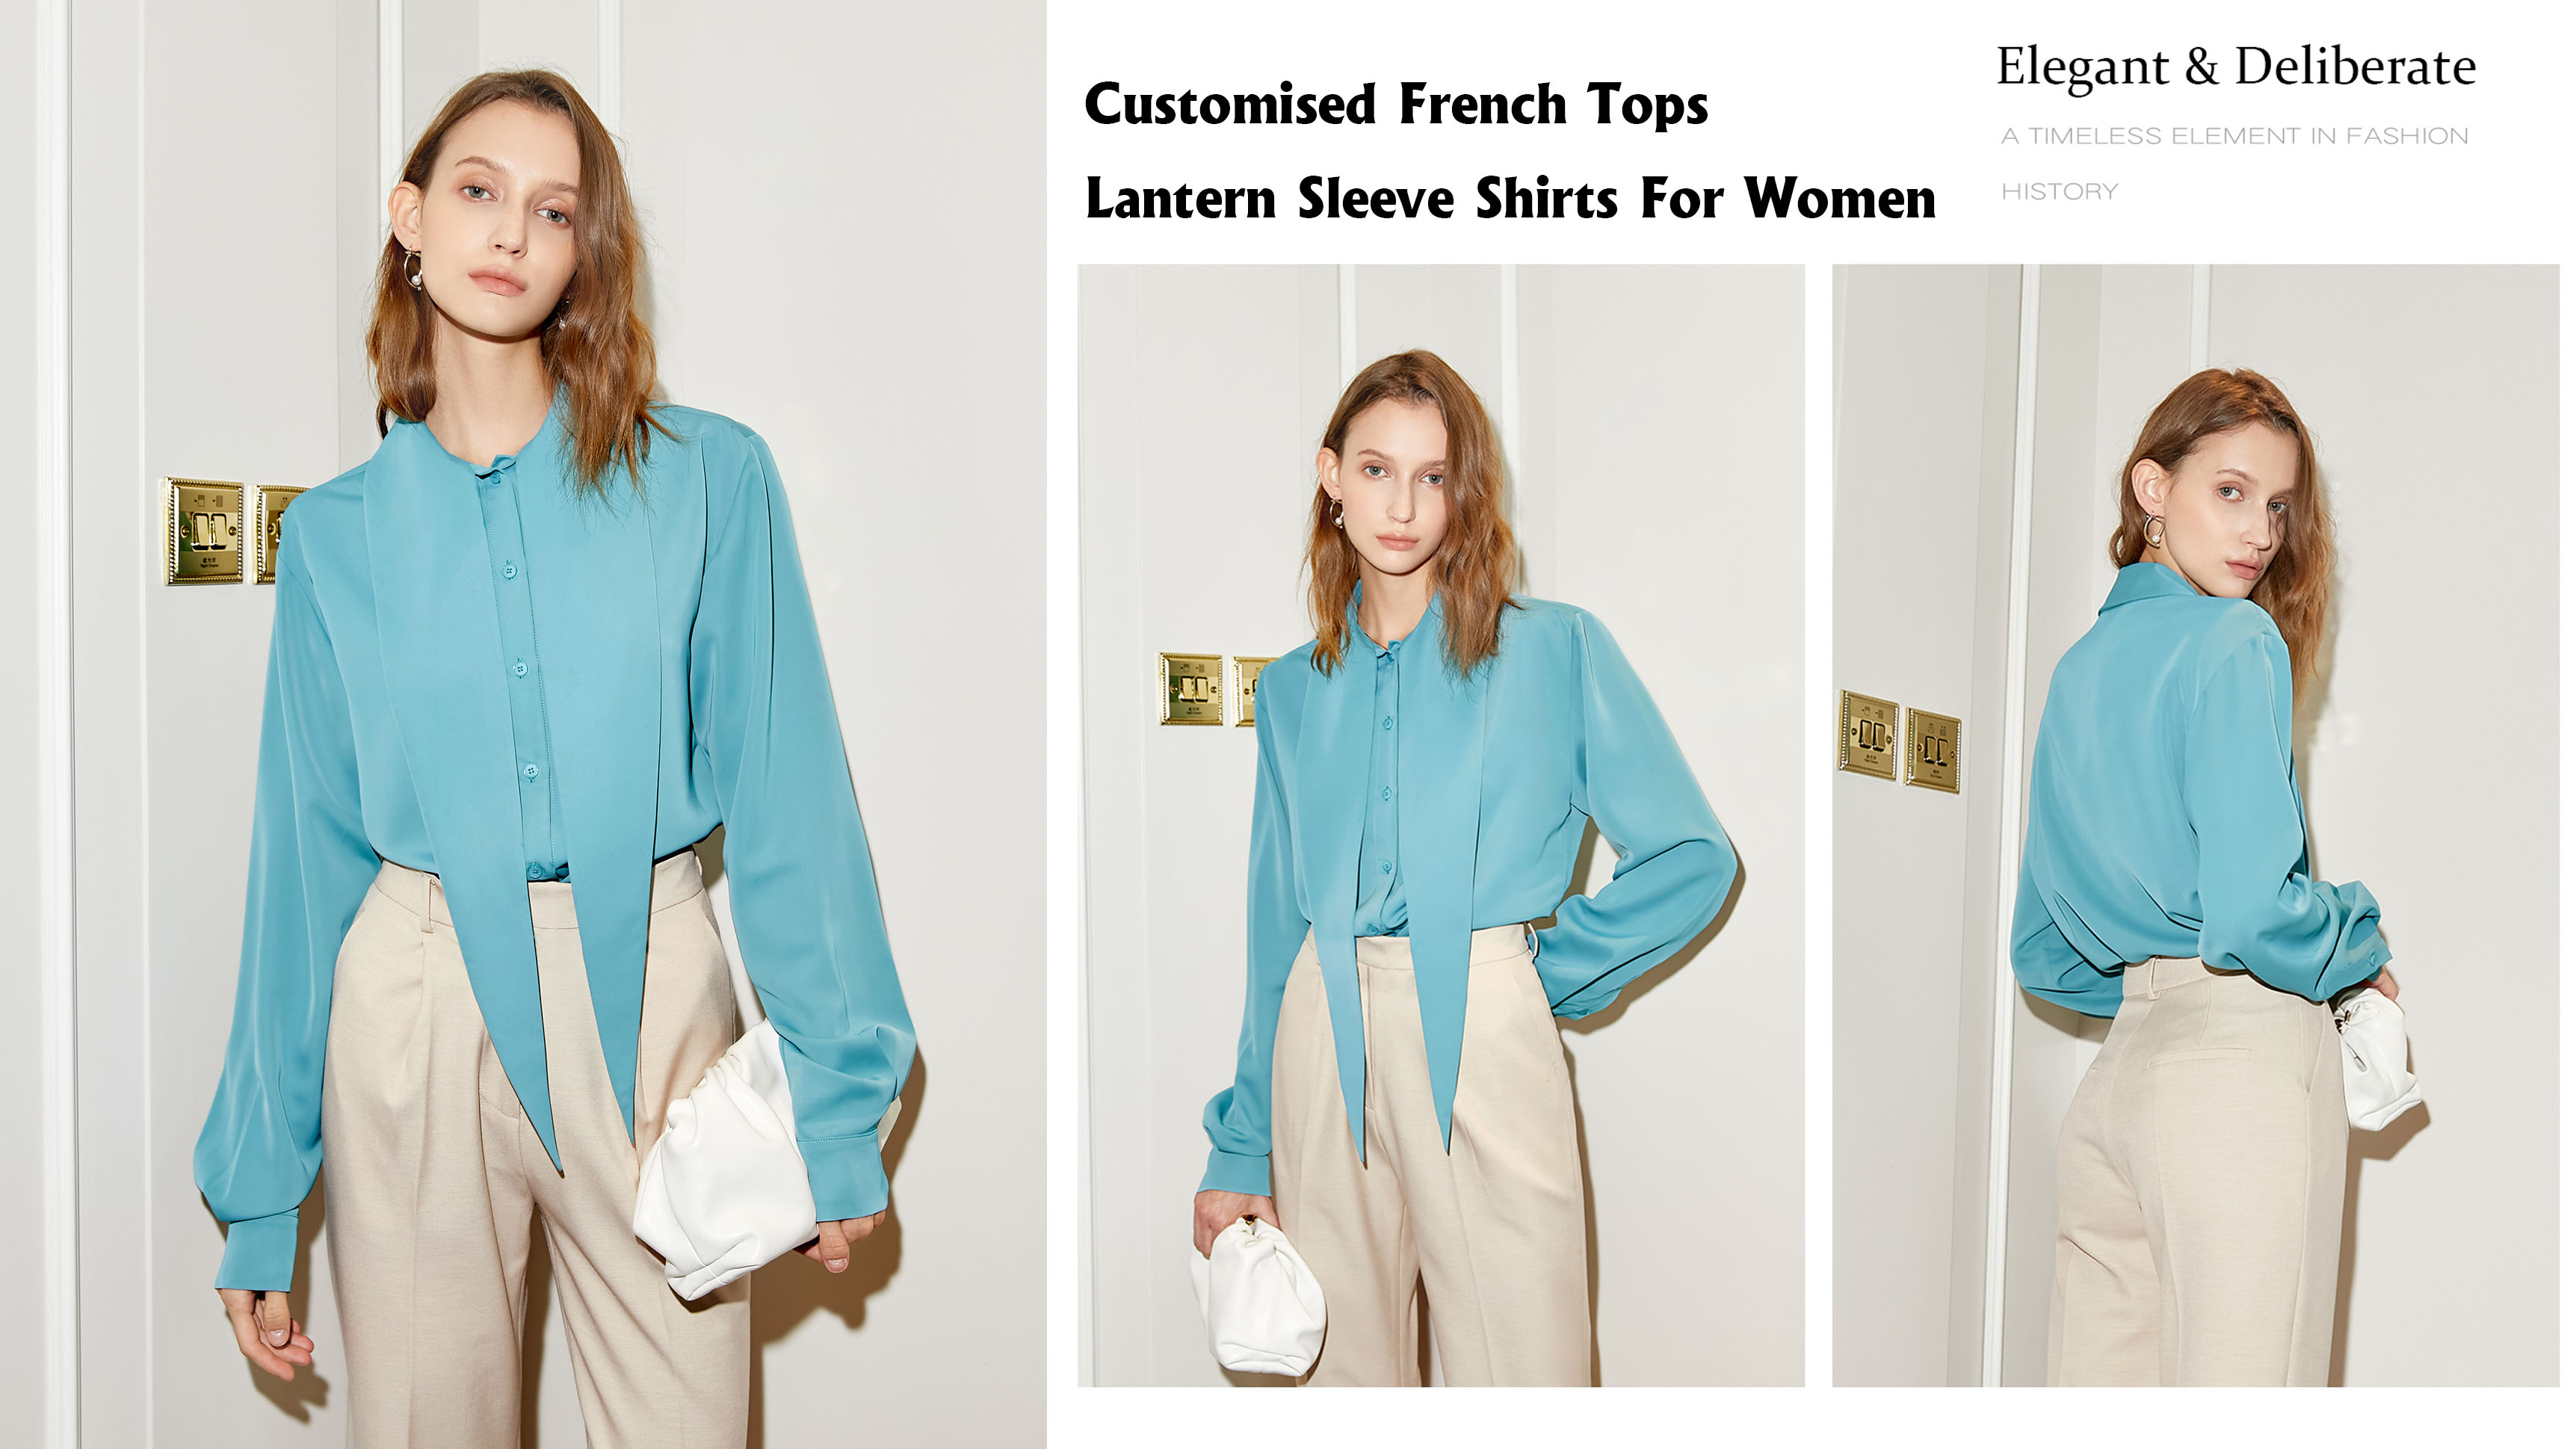 Camisas de manga farol con tops franceses personalizados para mujer